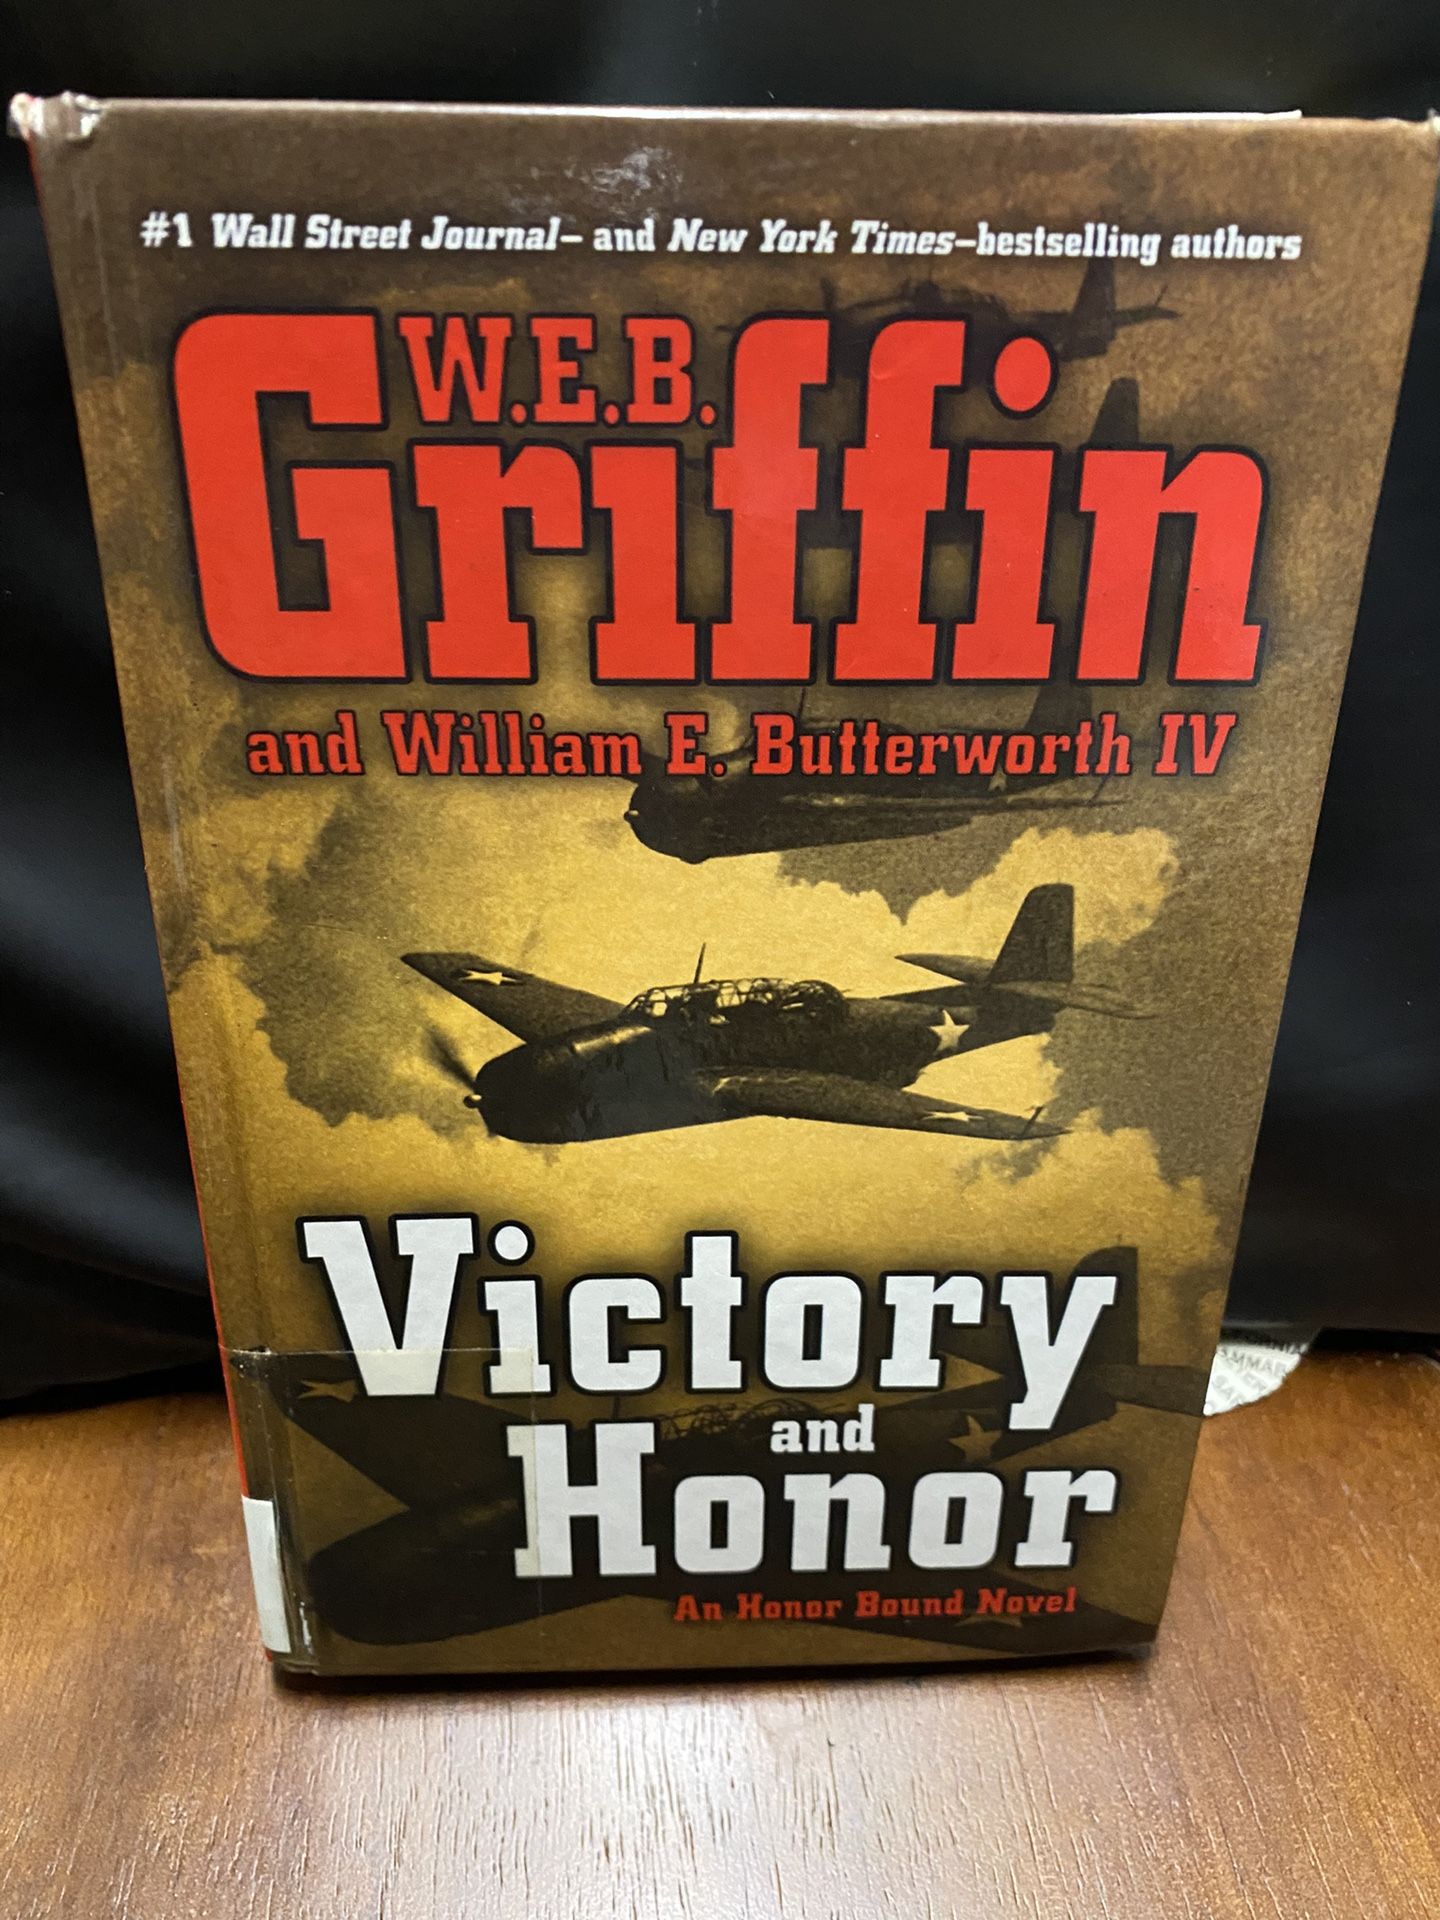 Web Griffin Books